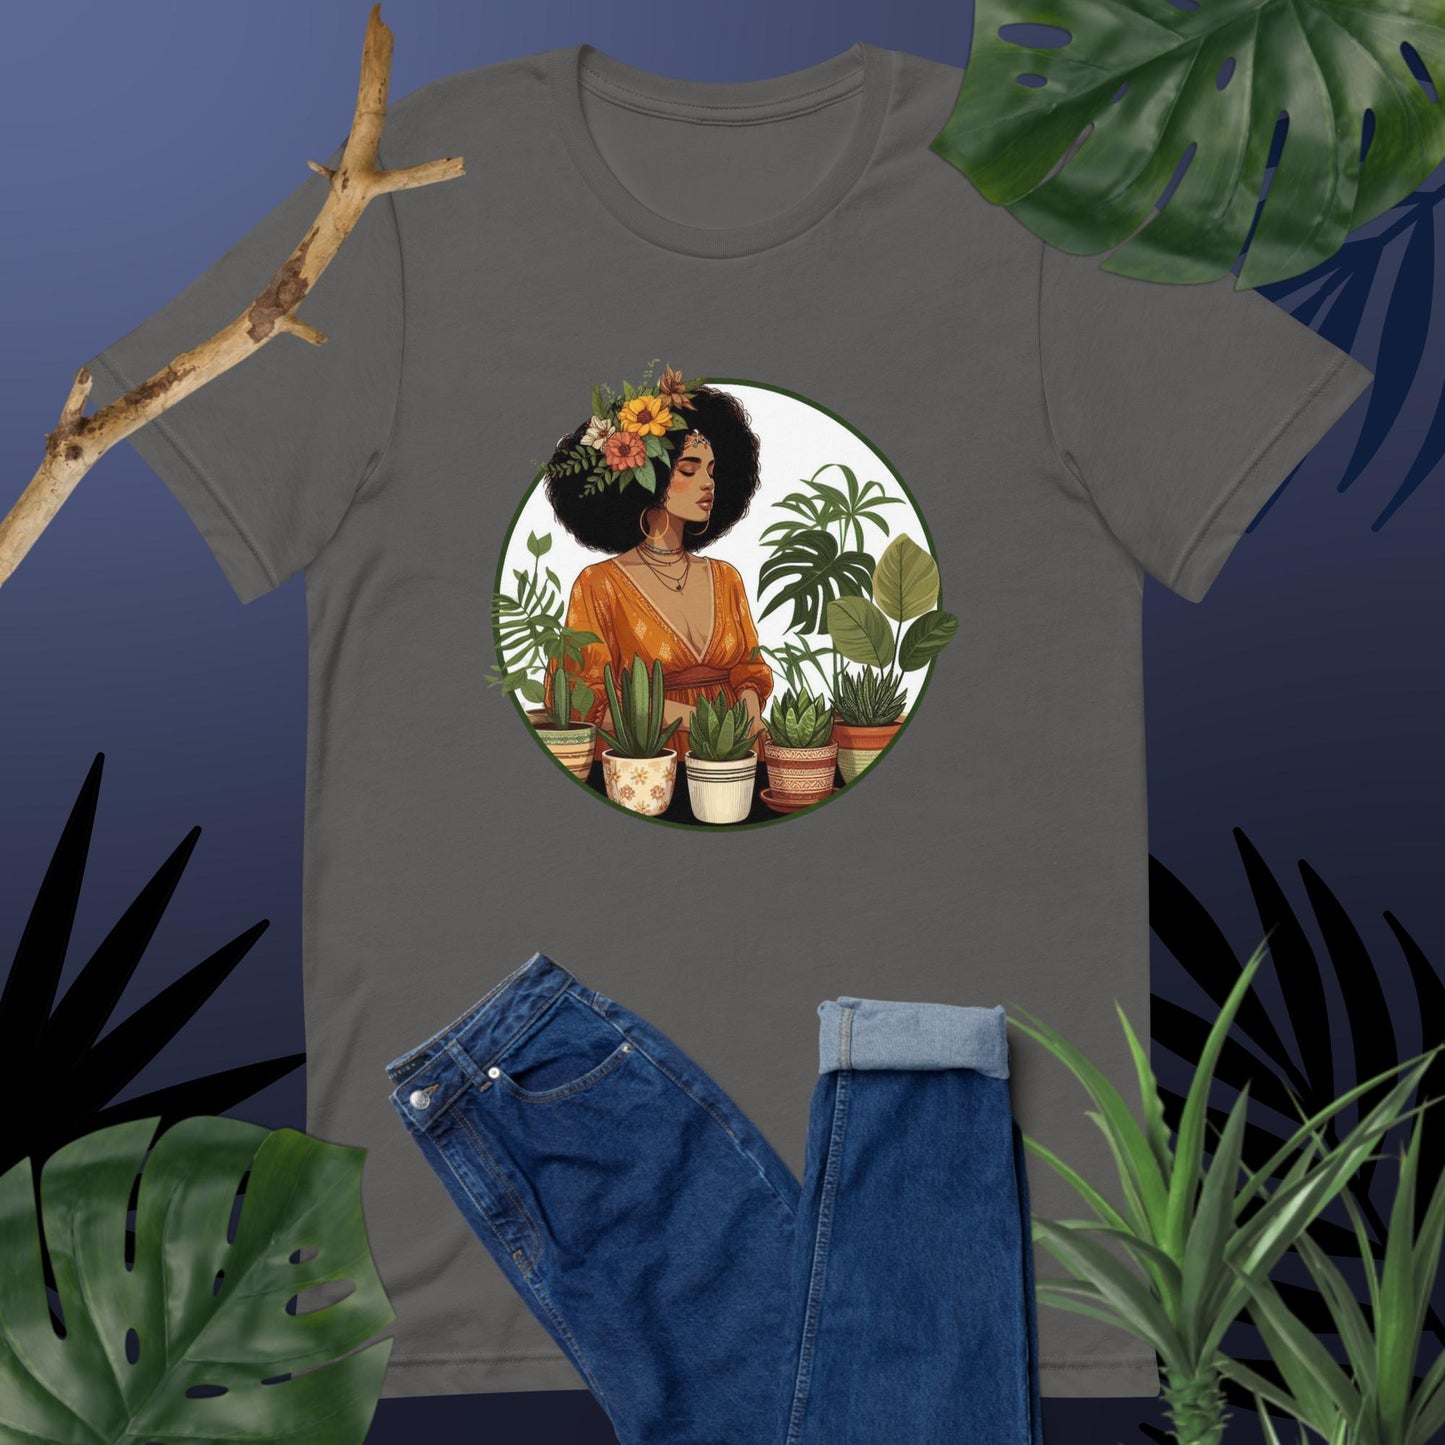 Plants + Boho = Vibe! T-Shirt | Boho Design 6 | 14 Colors